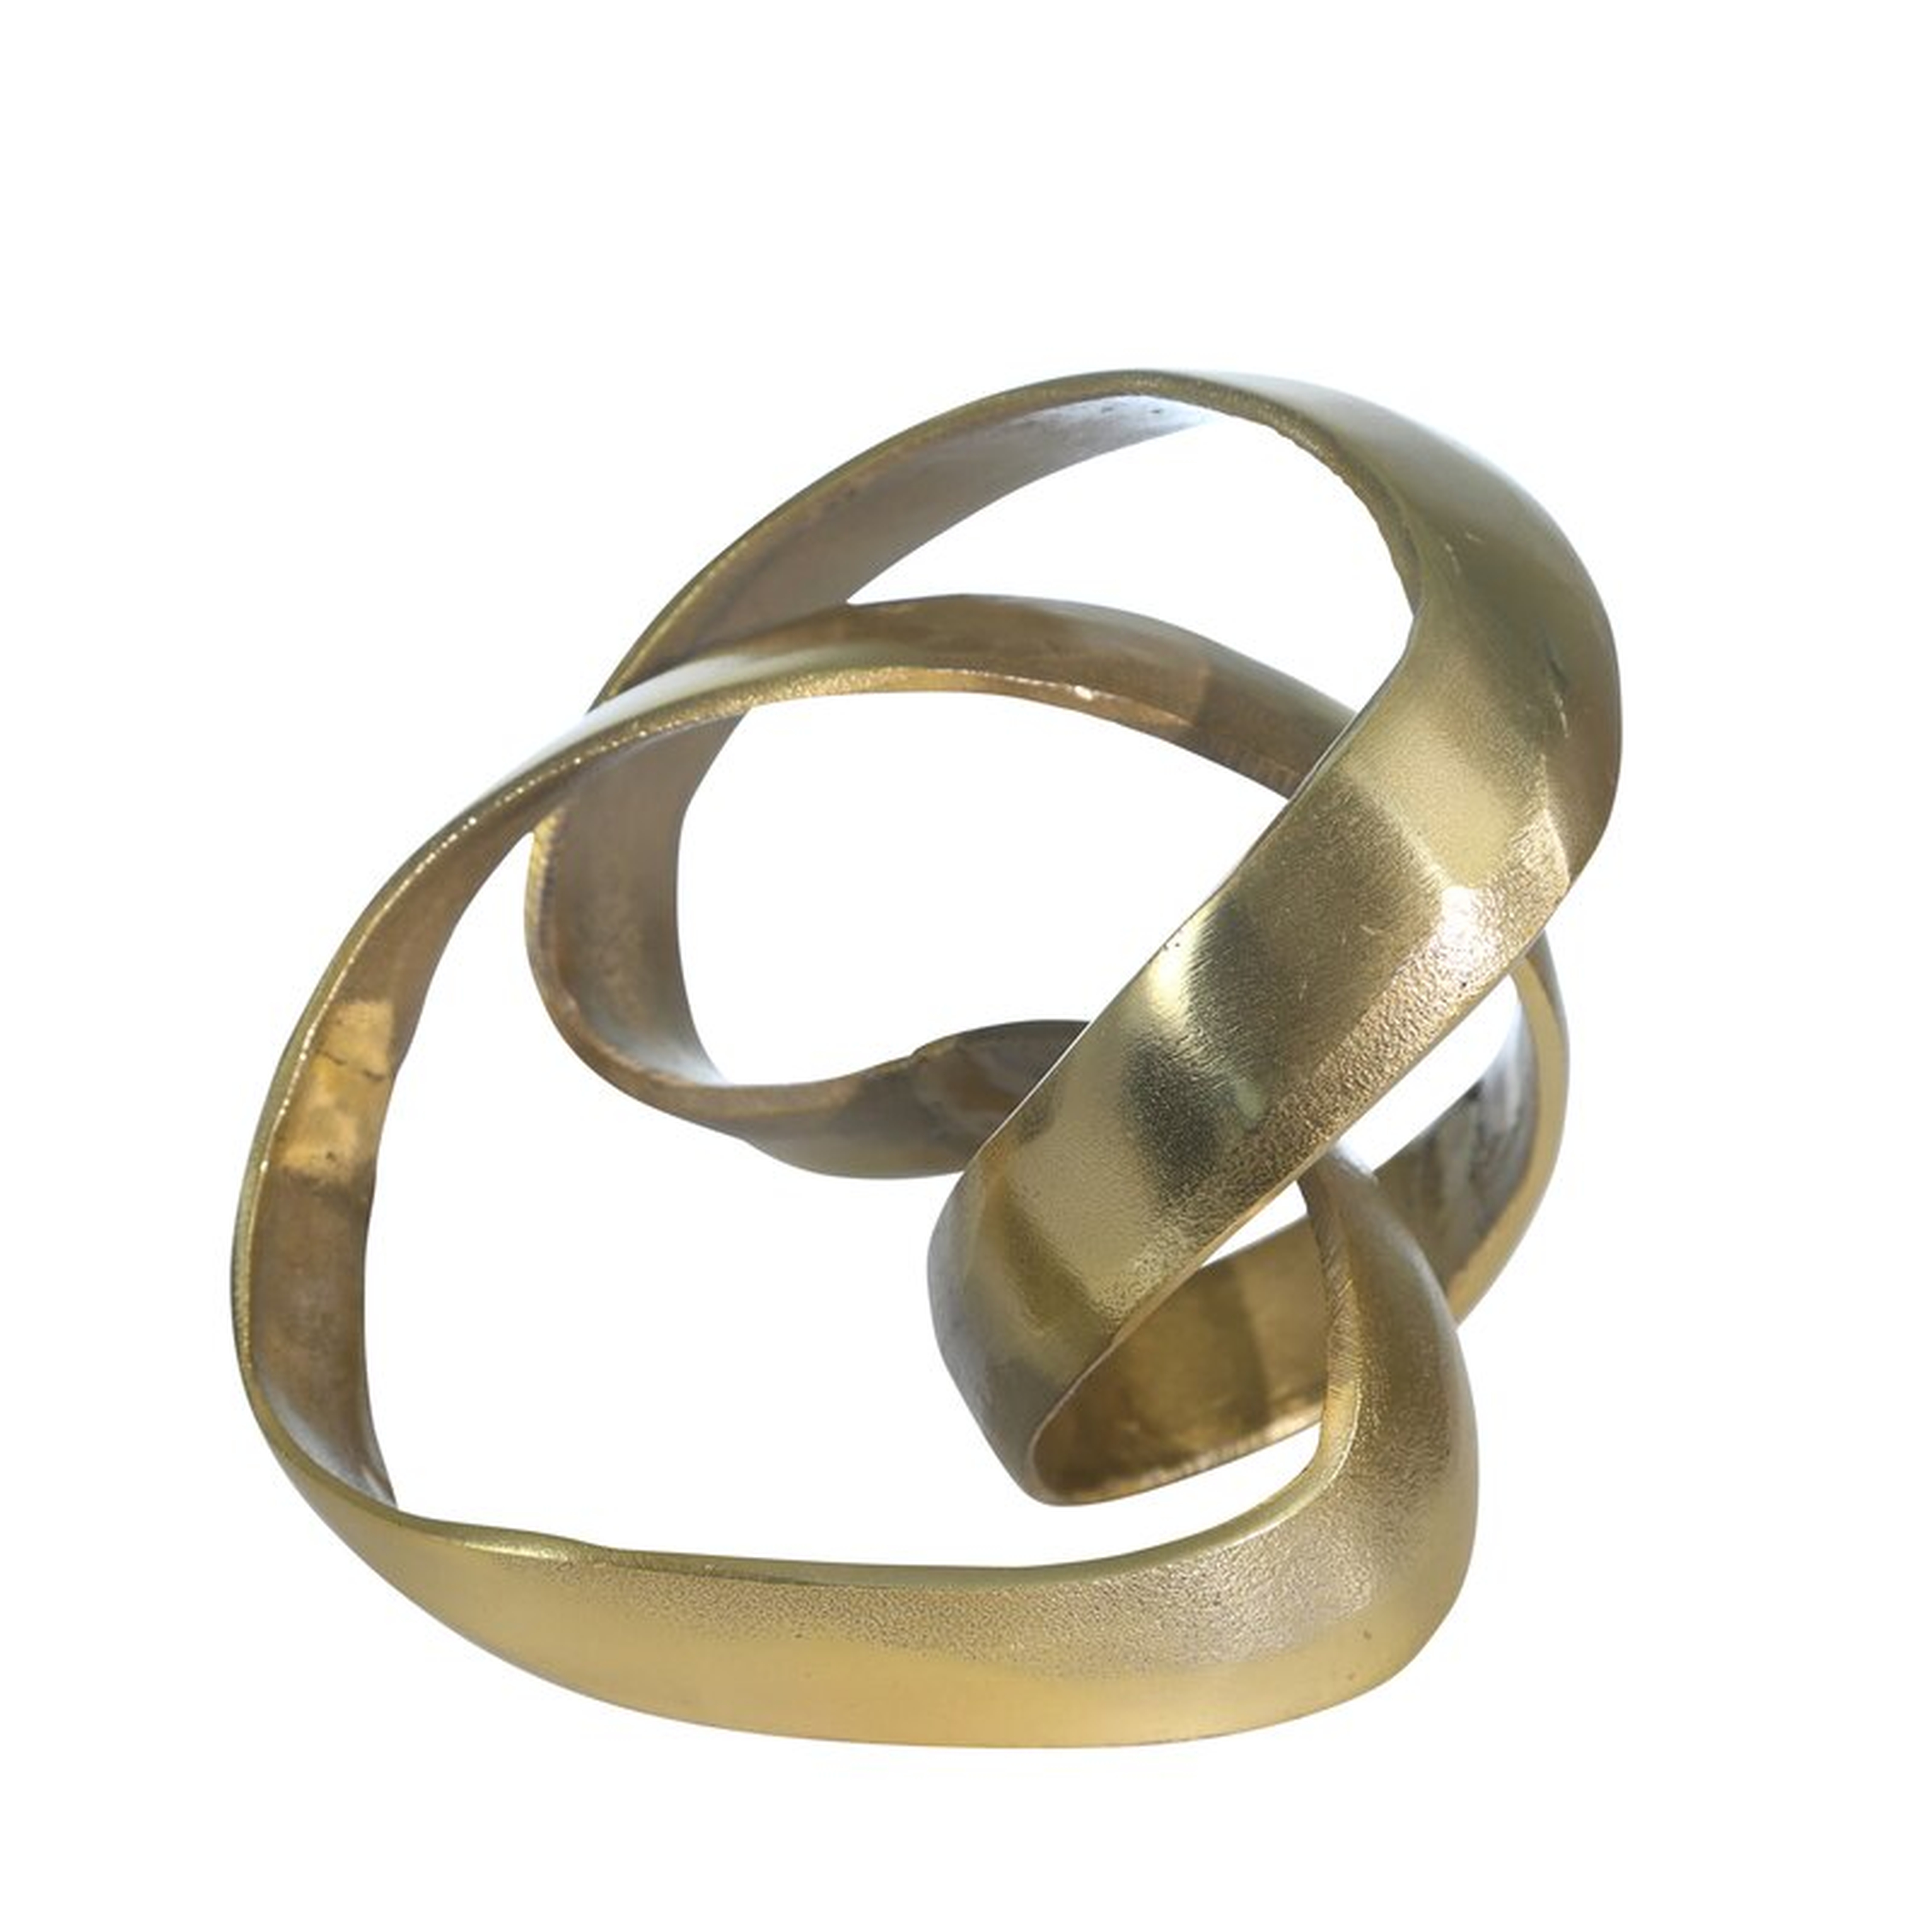 Samara Aluminum Knot Sculpture, Gold - Wayfair